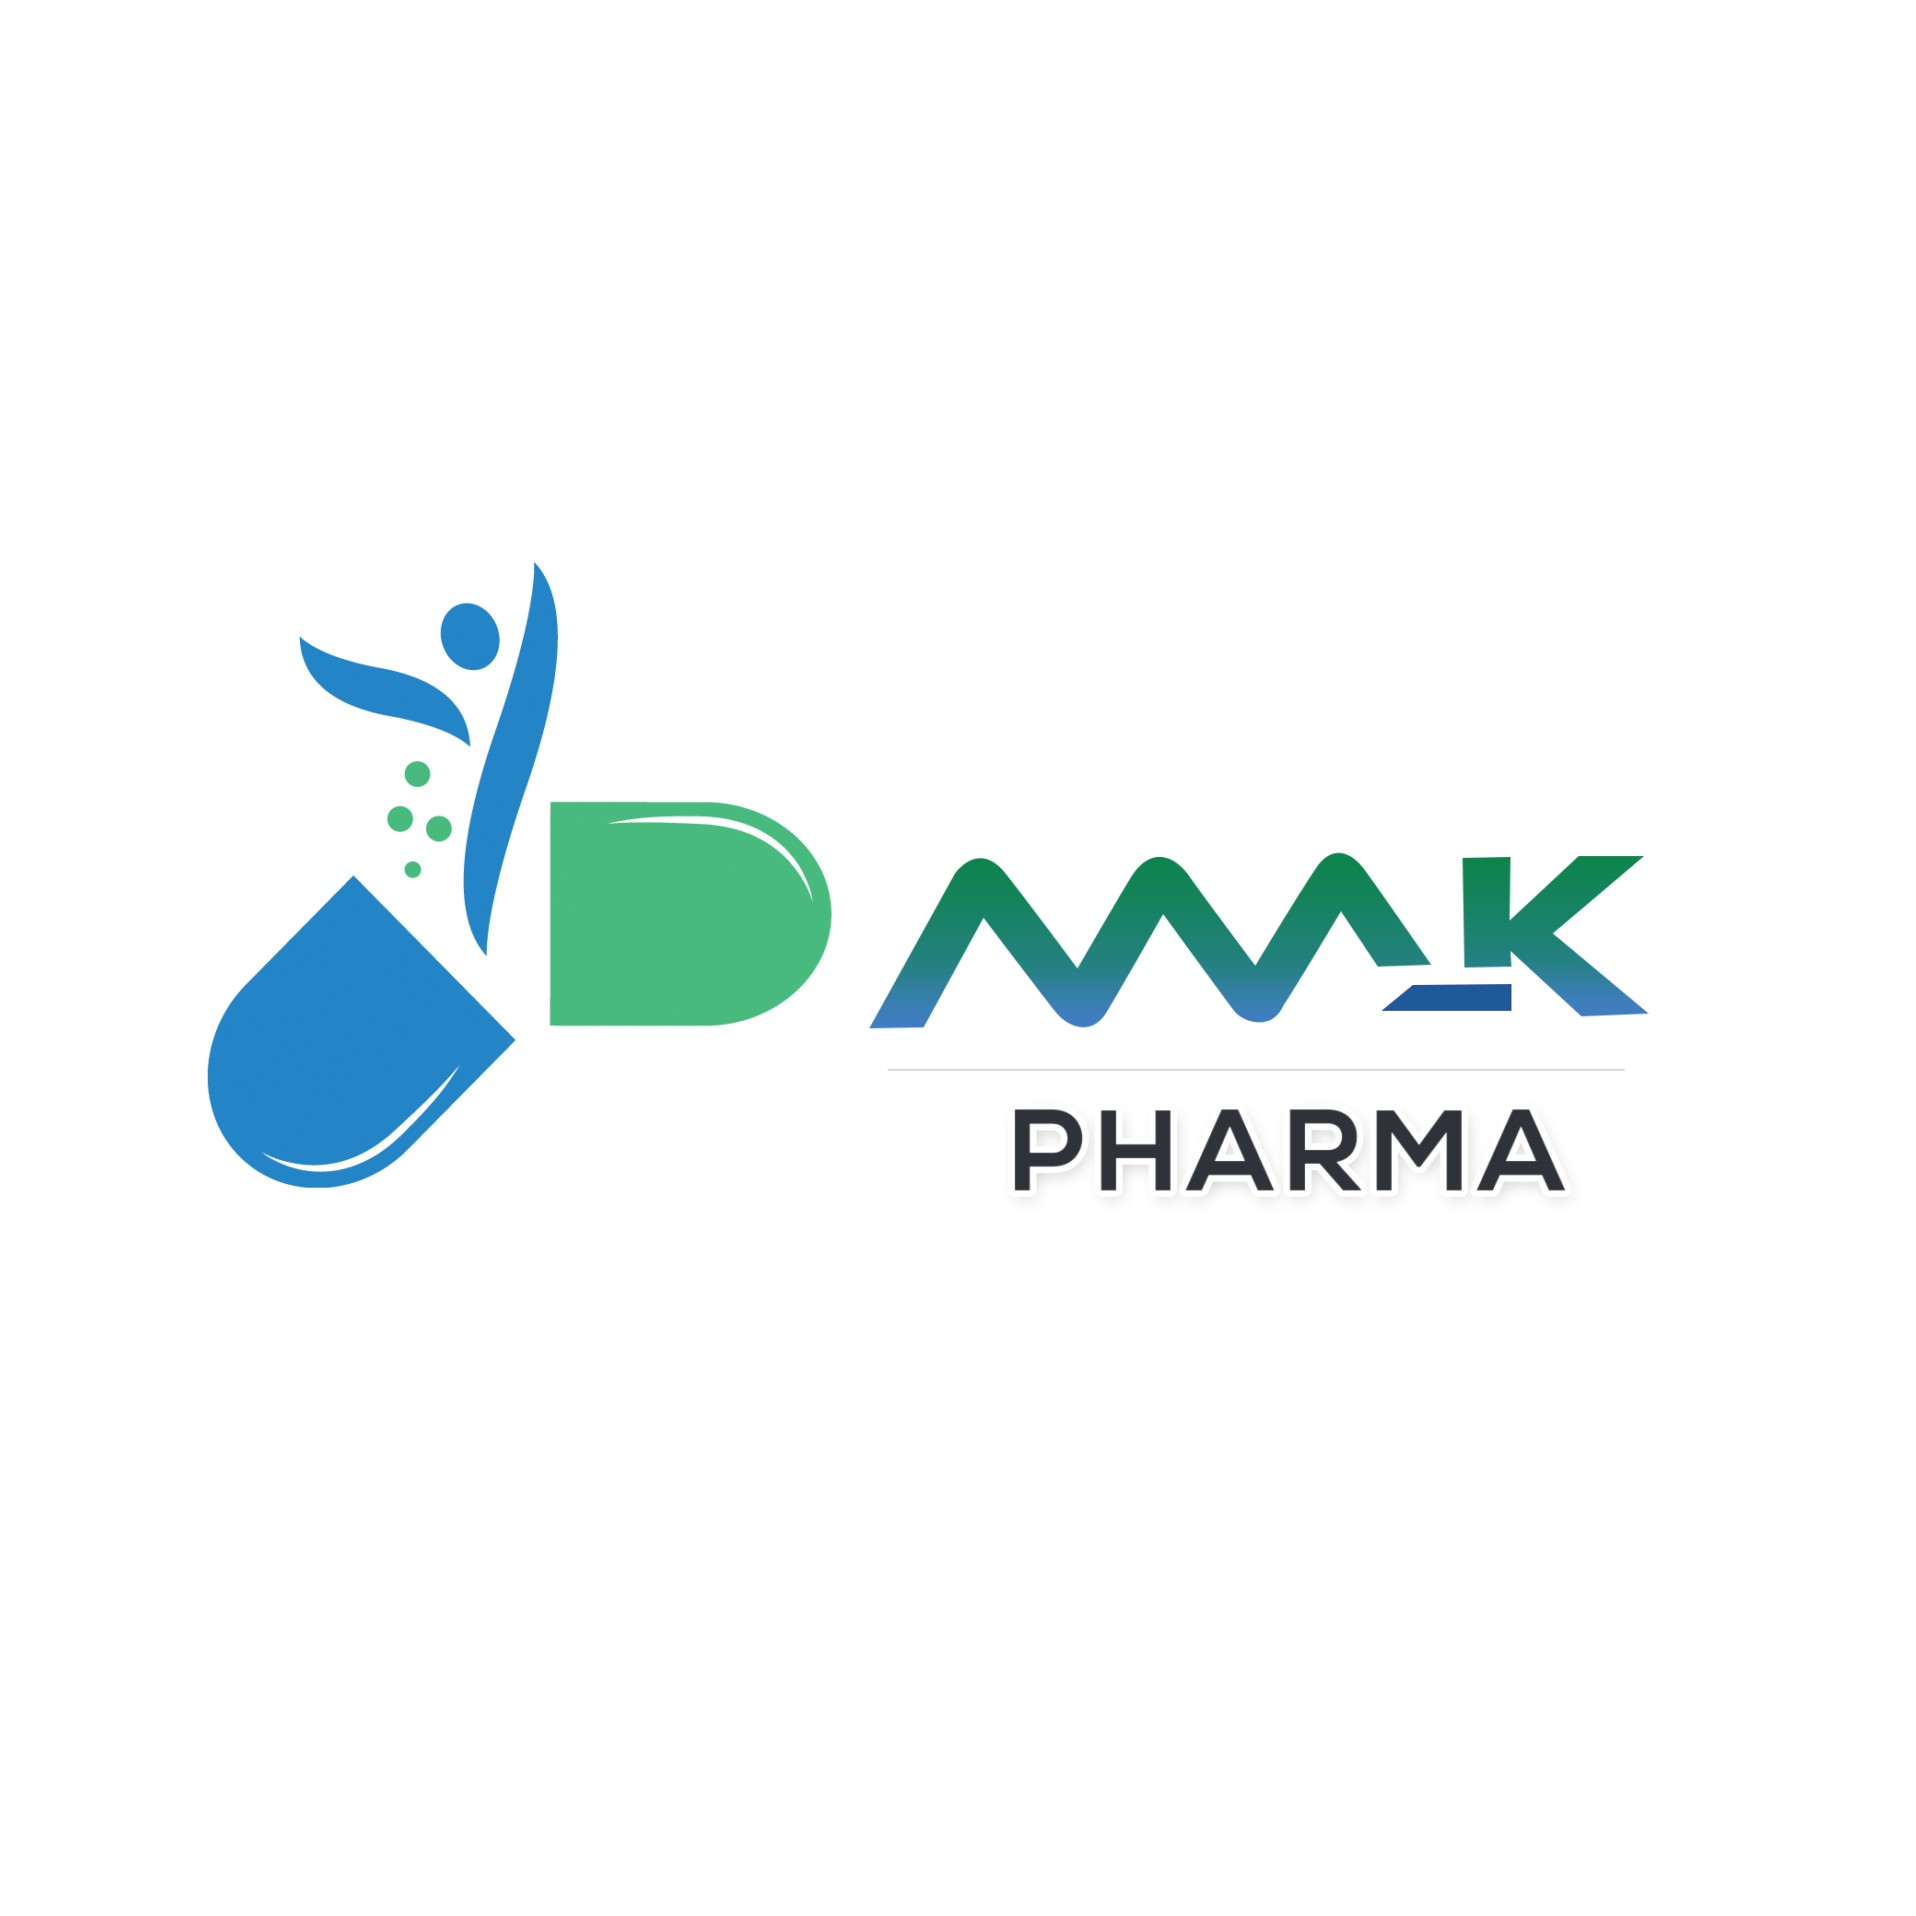 MAK Pharma USA Profile Picture